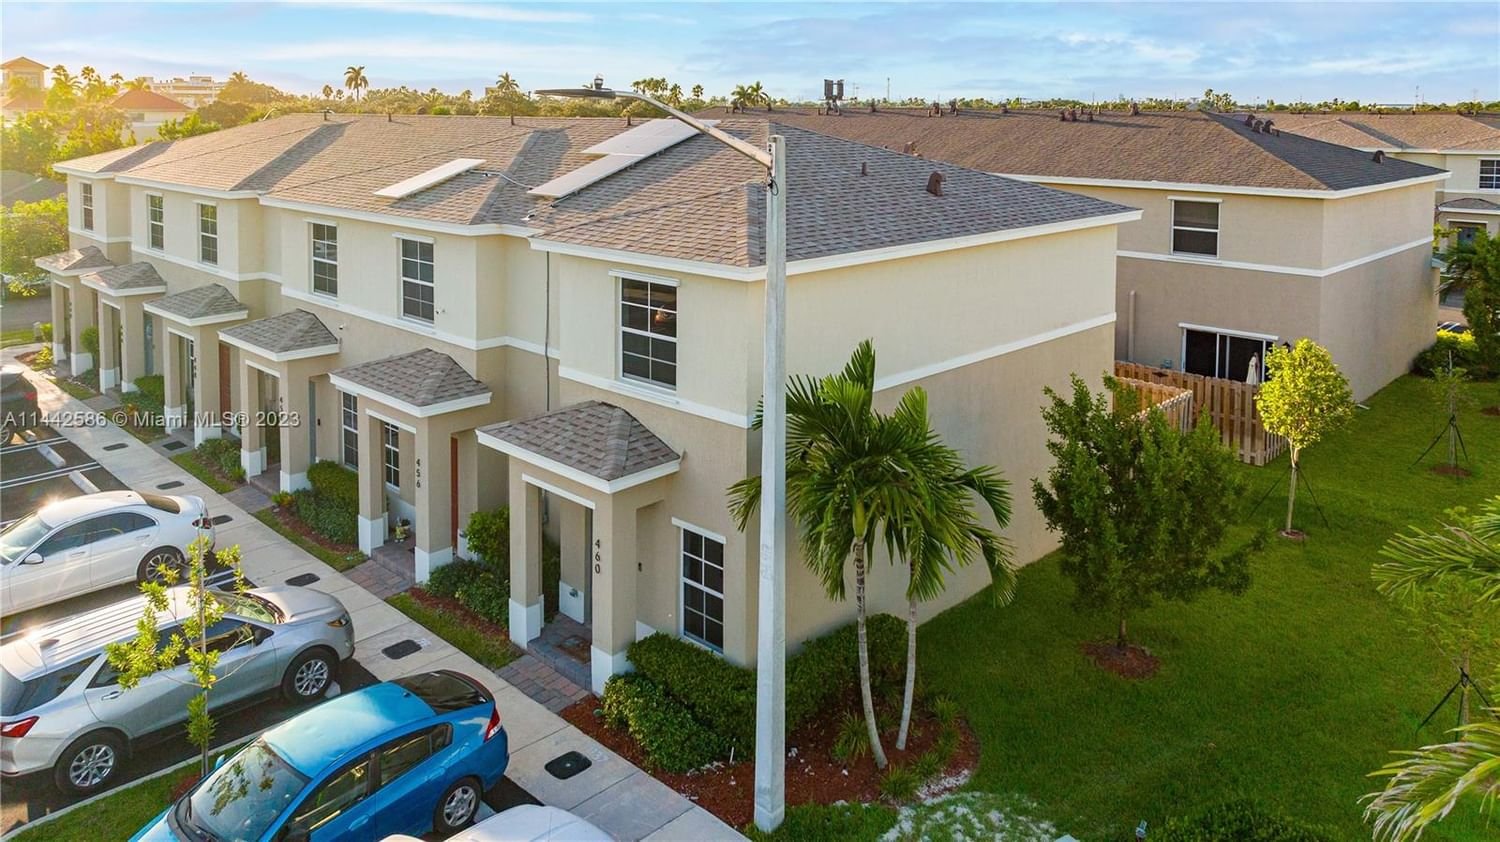 Real estate property located at 460 4th Ln #460, Miami-Dade County, FVP SUBDIVISION, Florida City, FL